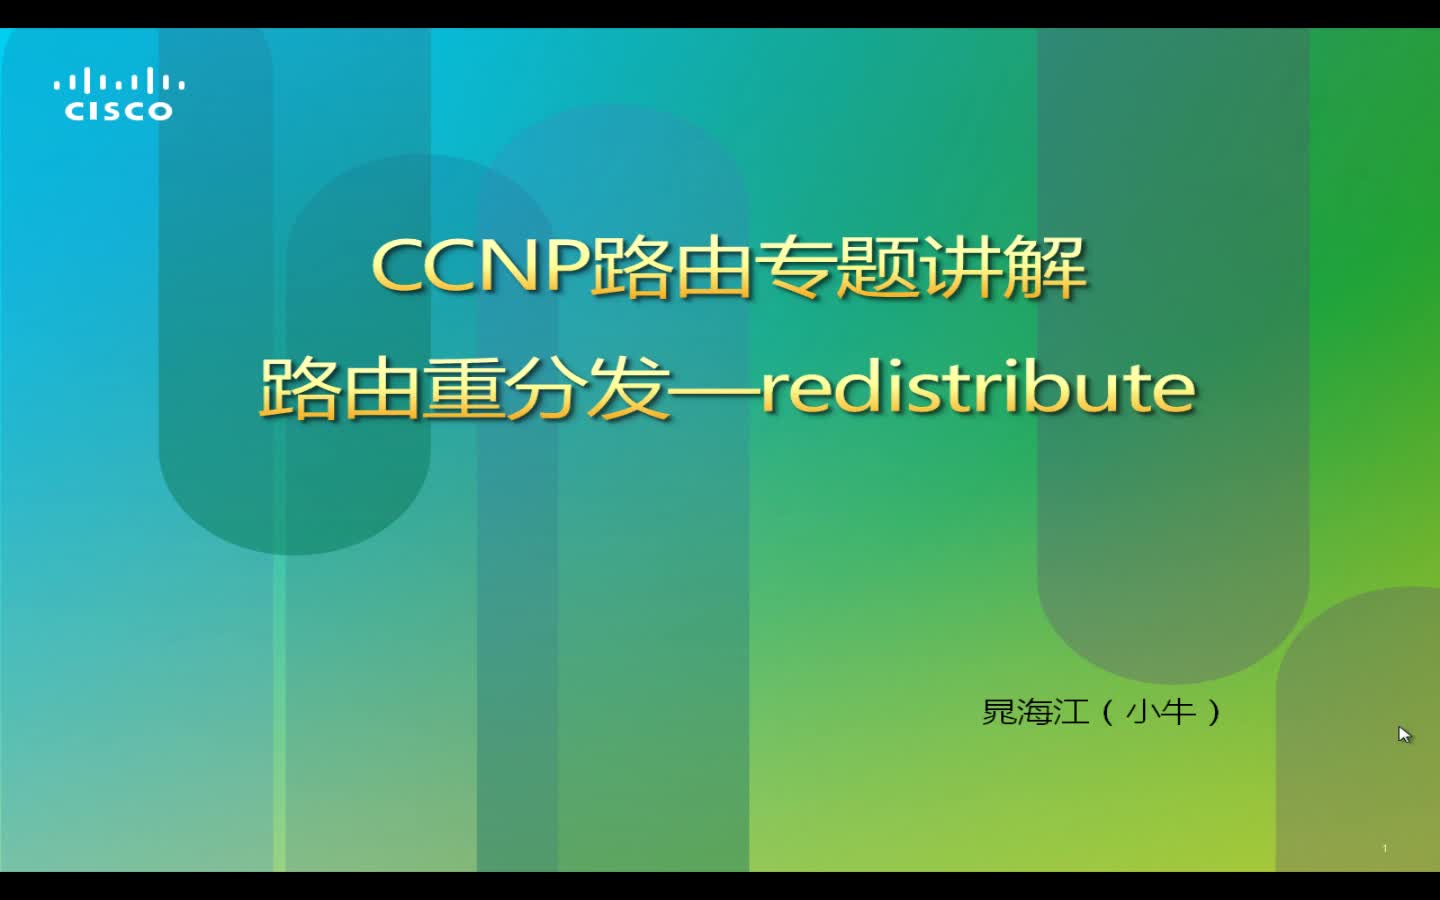 Cisco CCNP路由实验专题讲解视频课程--路由重分发篇